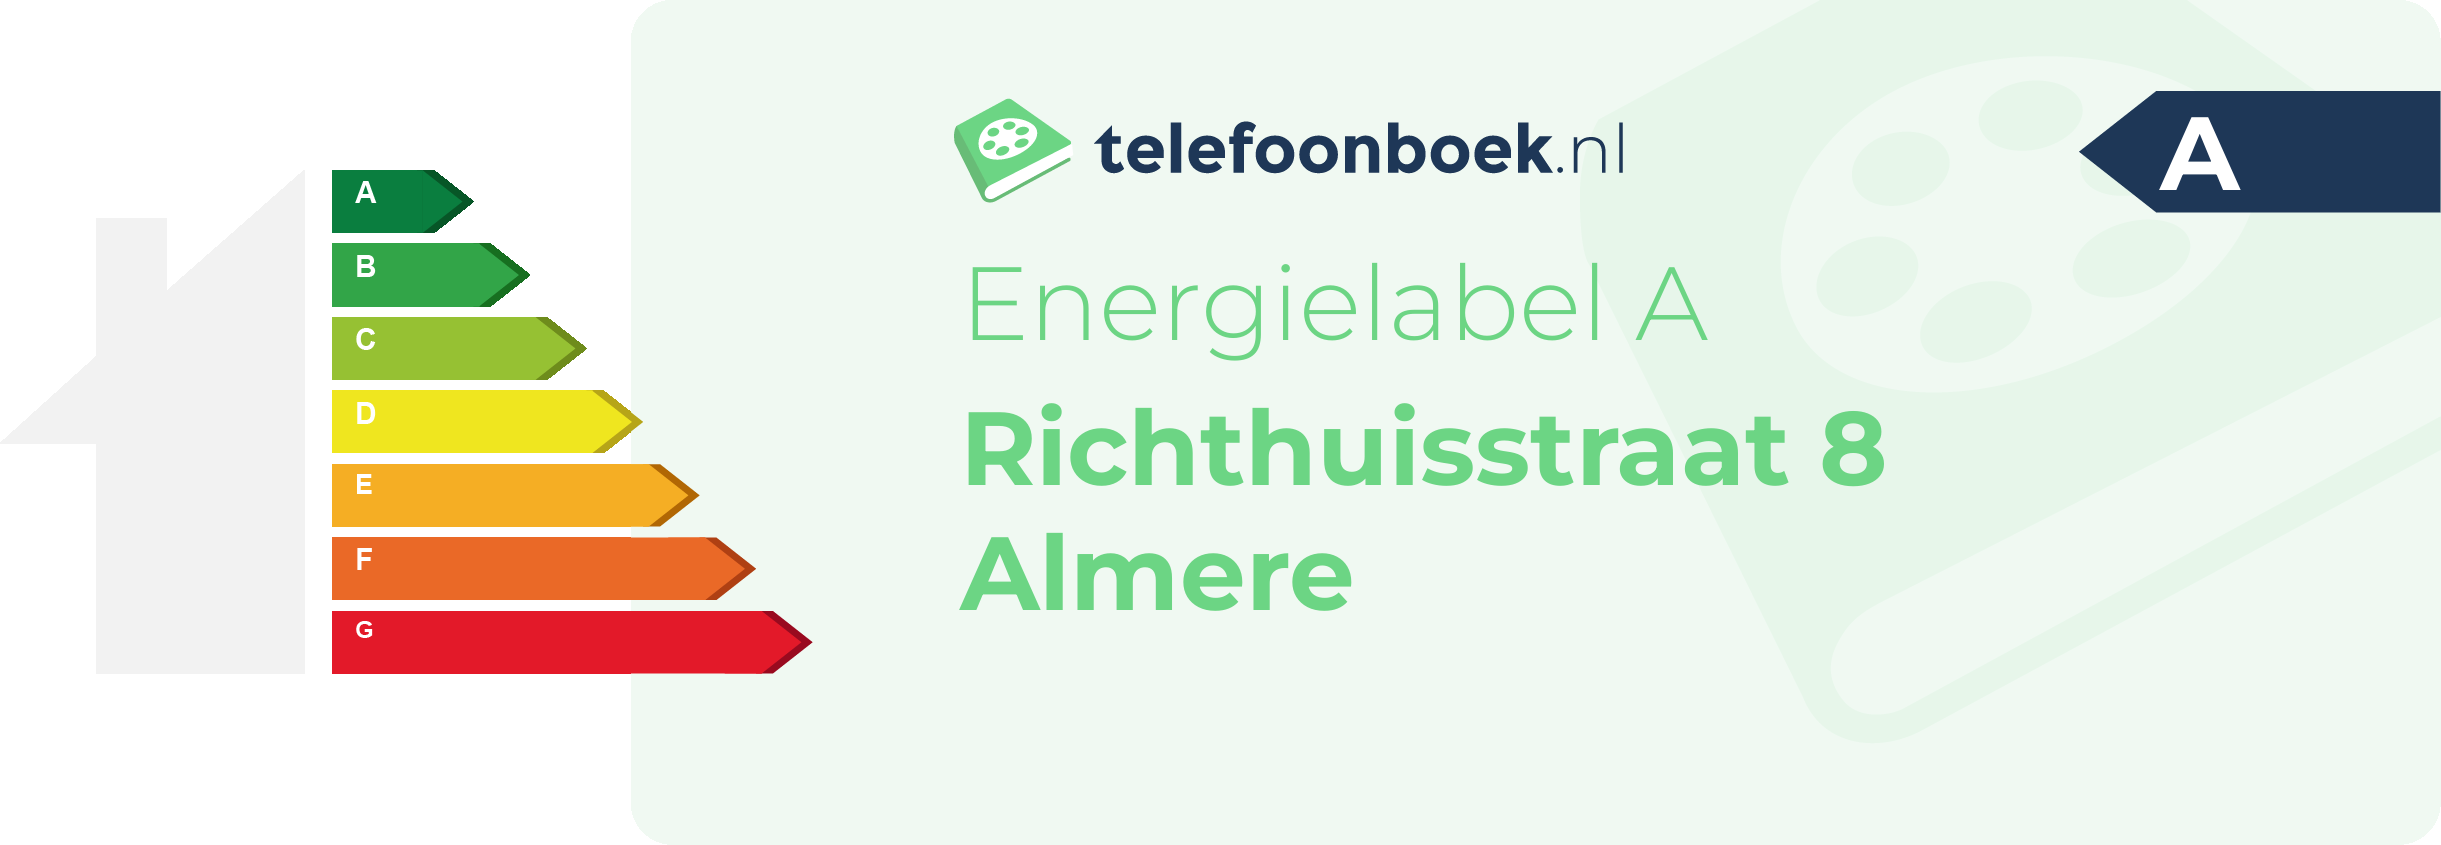 Energielabel Richthuisstraat 8 Almere